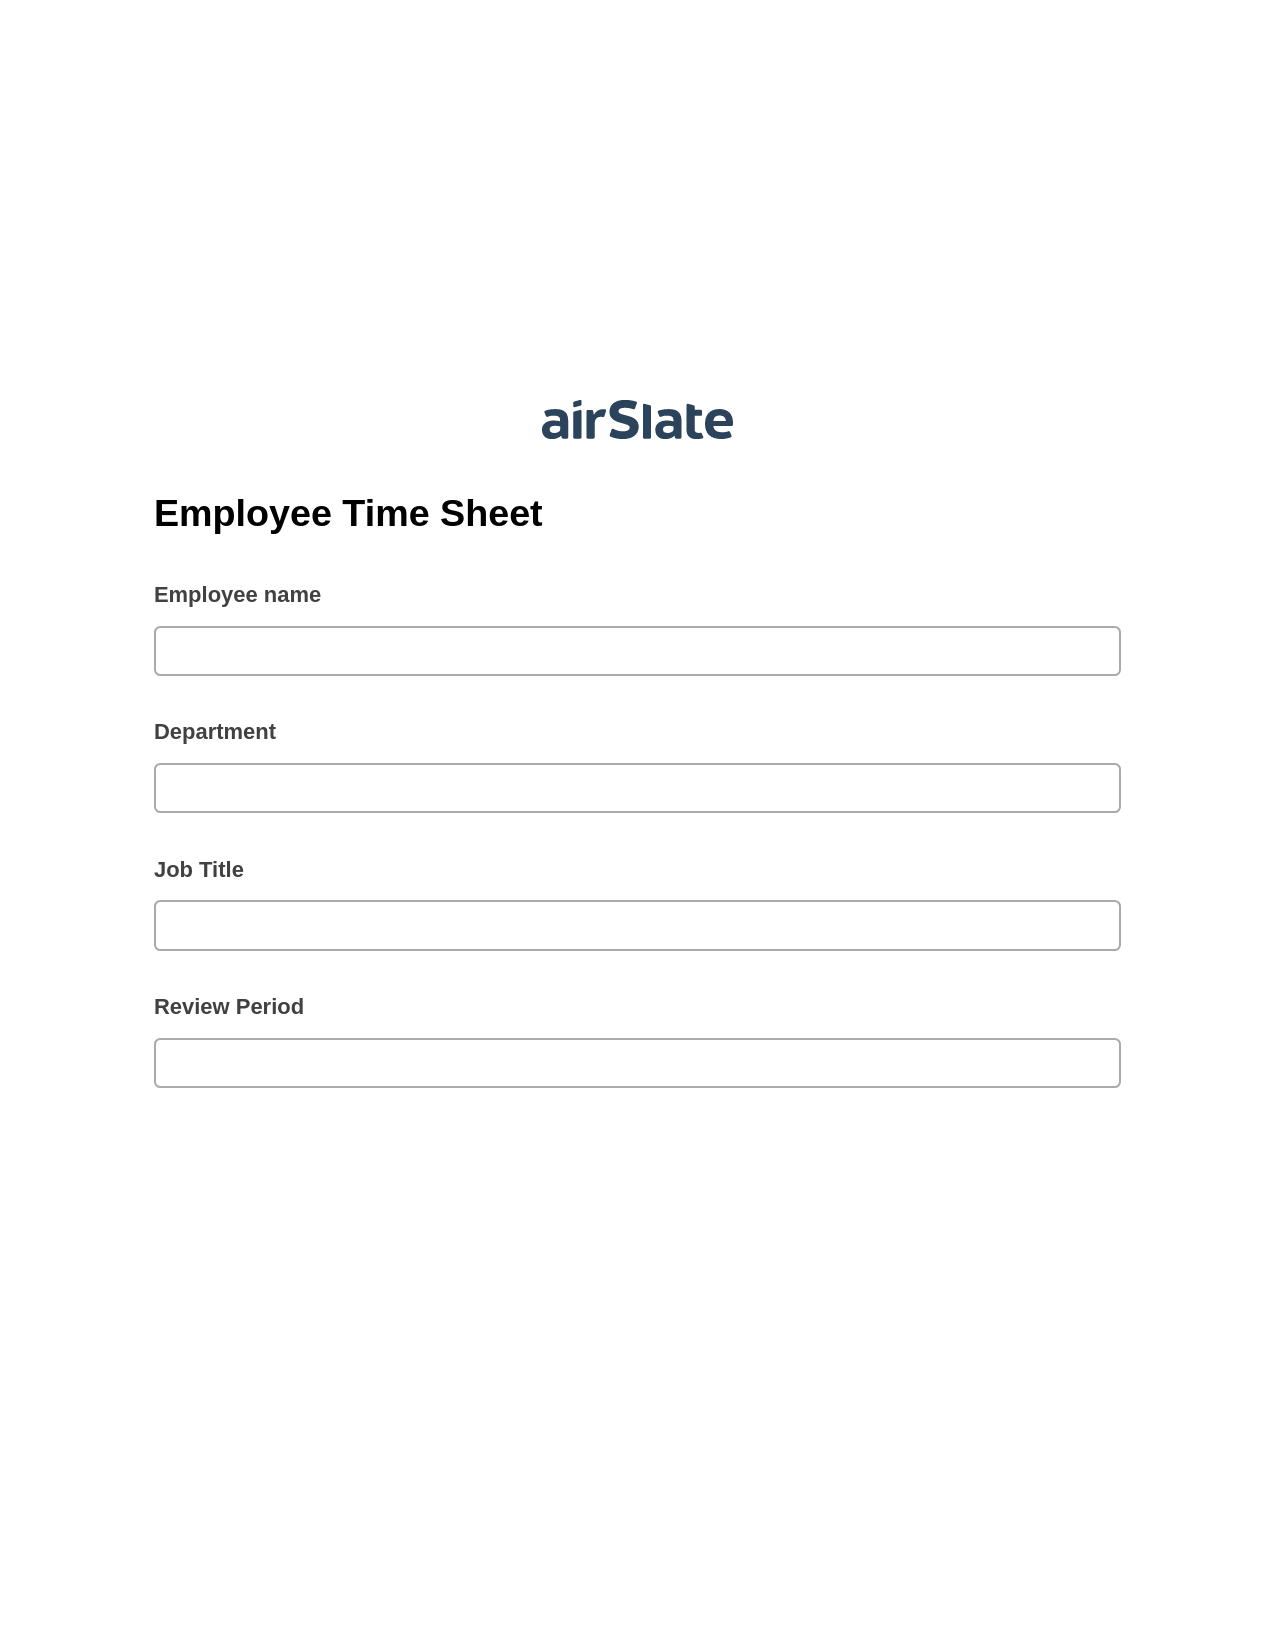 Multirole Employee Time Sheet Pre-fill from Excel Spreadsheet Bot, Remove Slate Bot, Slack Two-Way Binding Bot